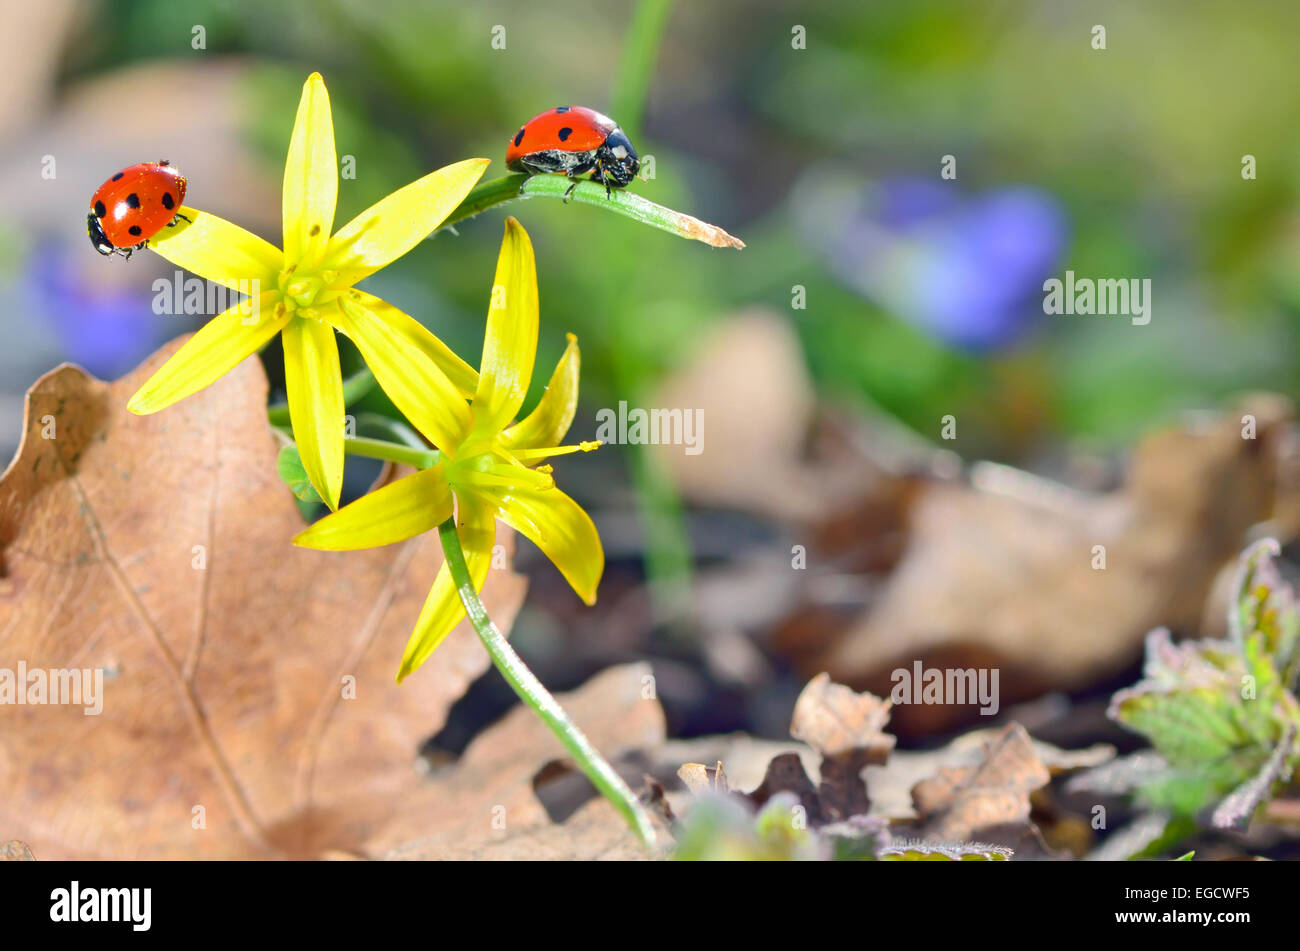 Ladybugs (Coccinella) on yellow flower petal Stock Photo